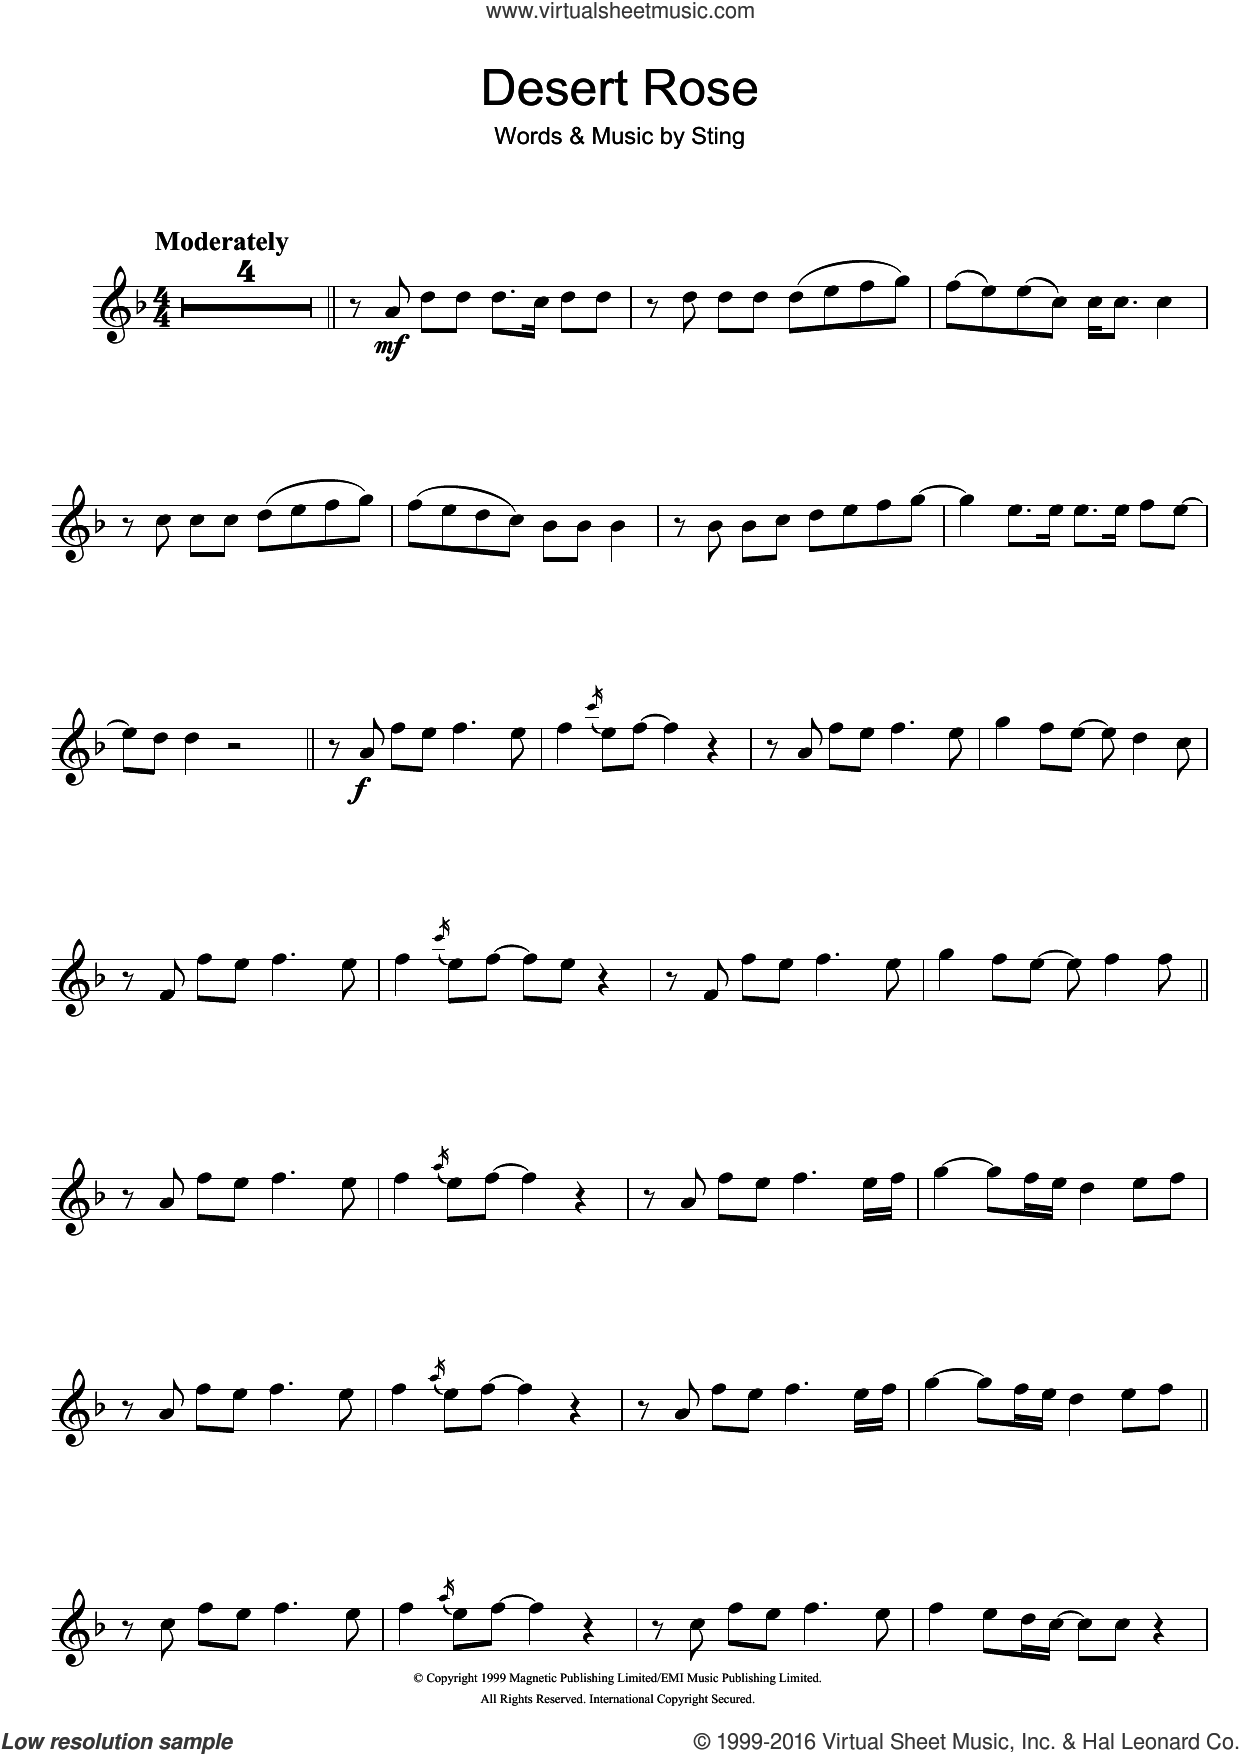 Sting - Desert Rose Sheet Music For Clarinet Solo [PDF]